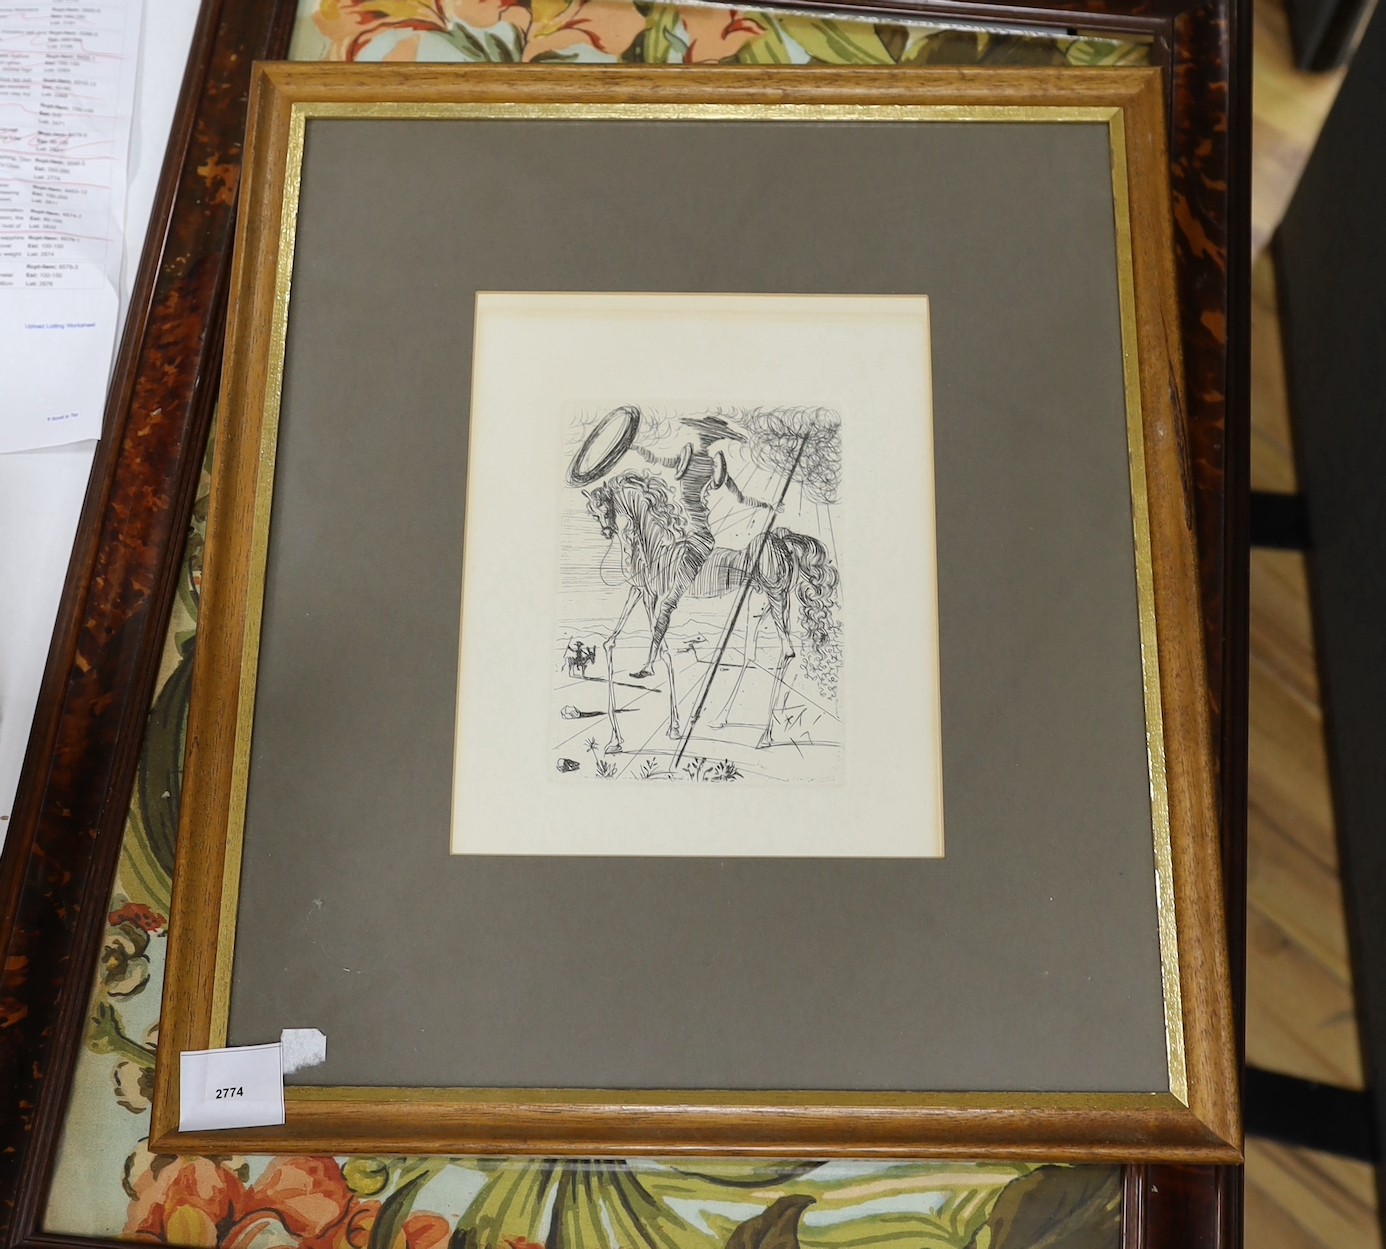 After Salvador Dali, etching, ‘Don Quixote’ plate mark 17x12cm